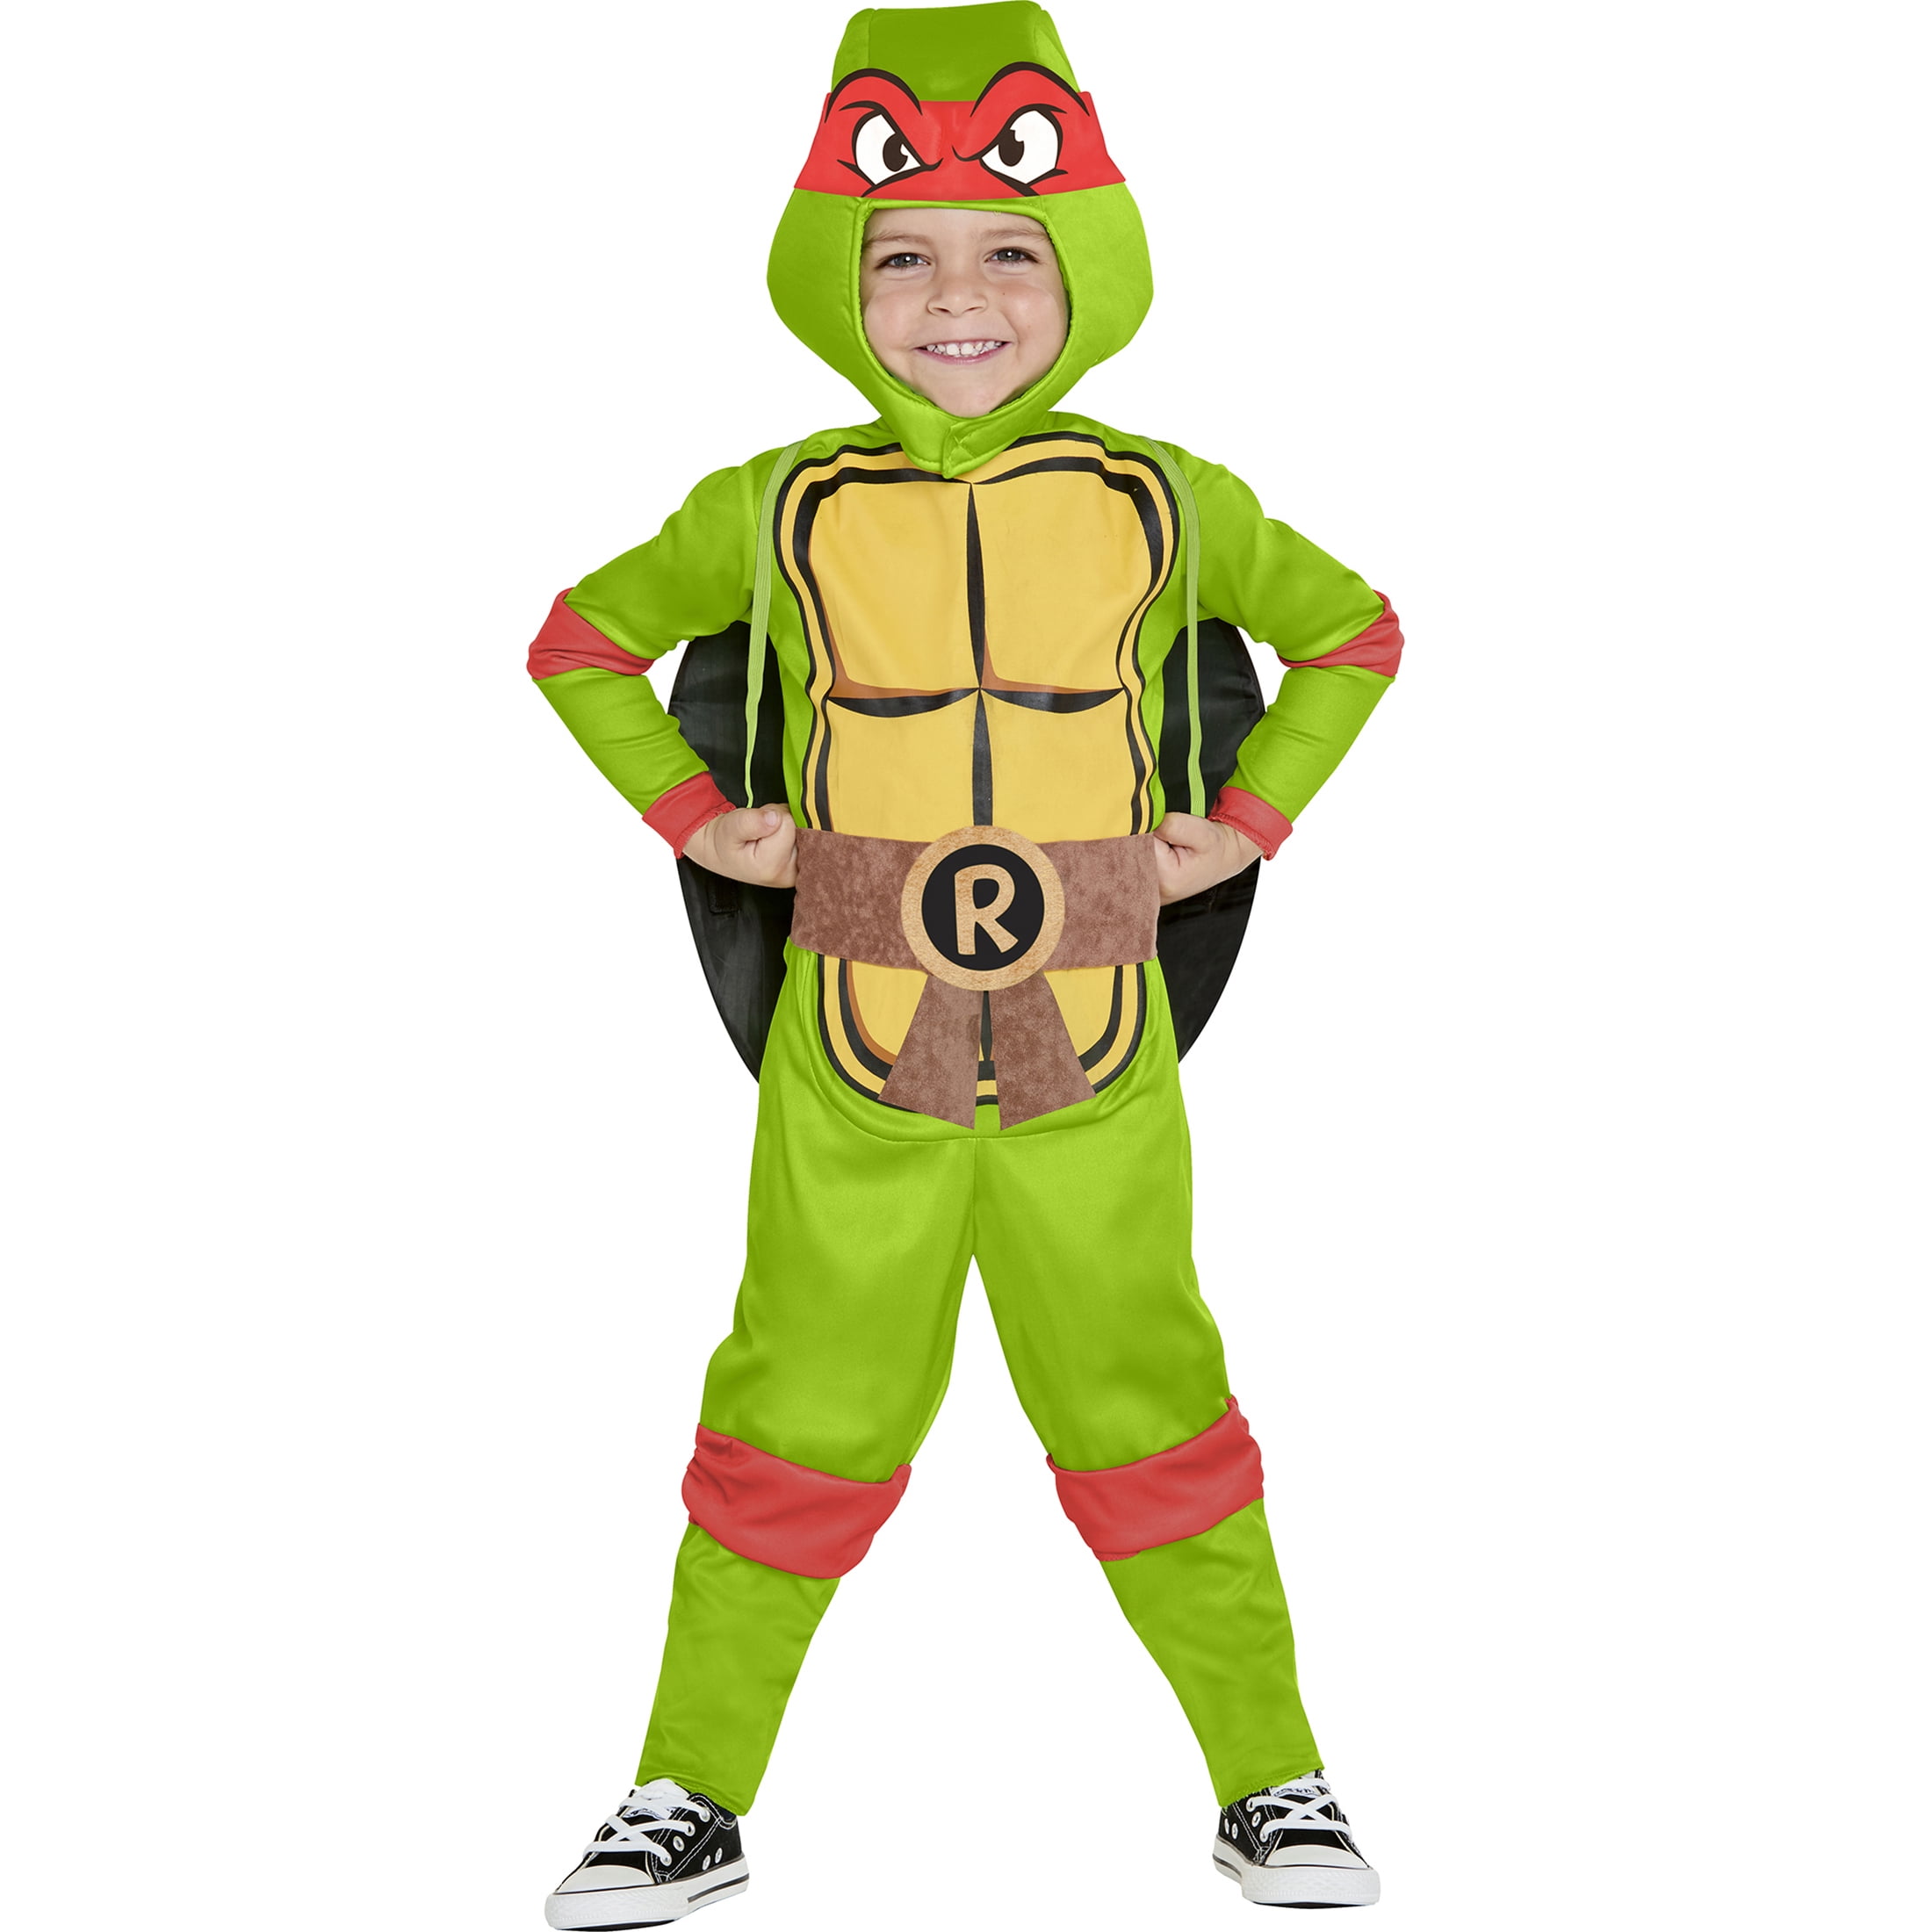 Teenage Mutant Ninja Turtles Girl's Raphael Costume T-Shirt Green